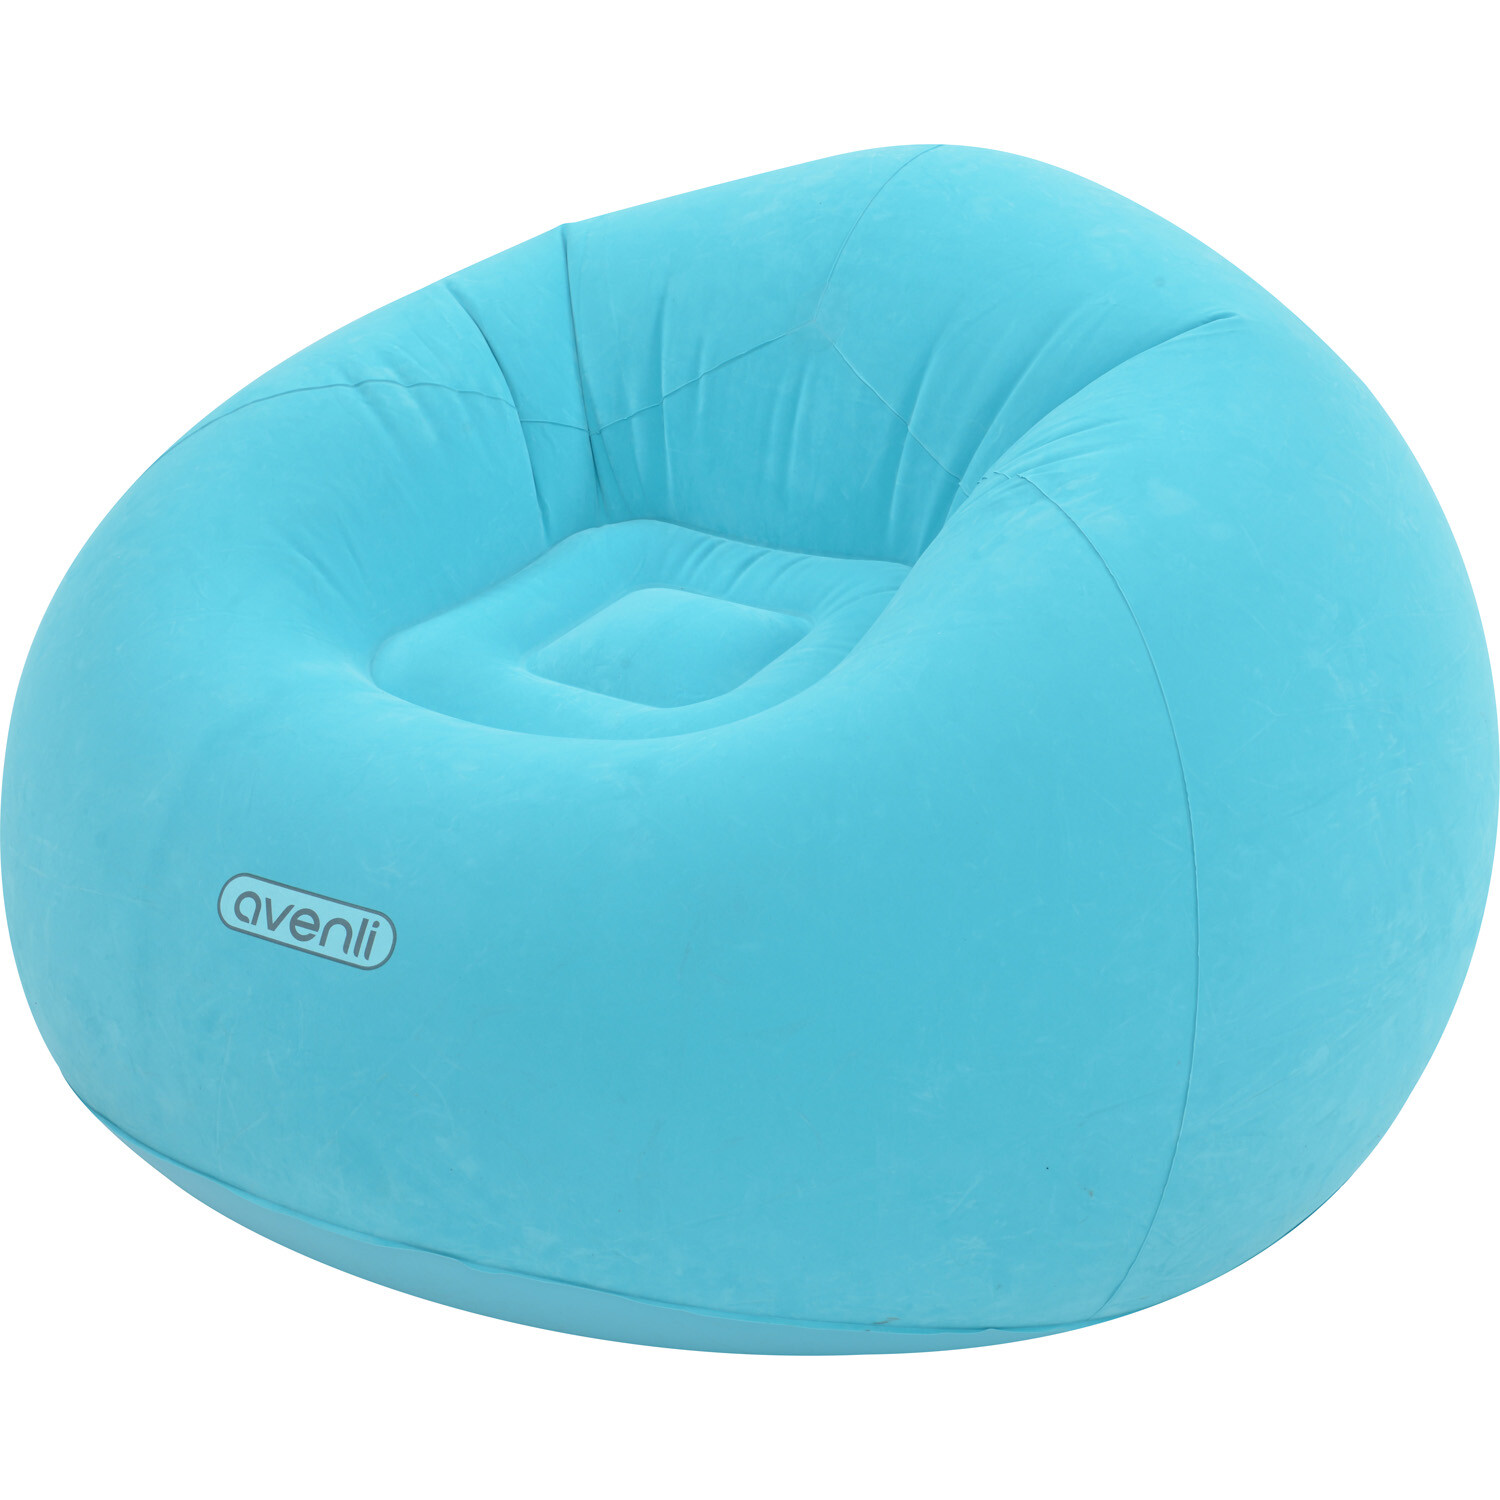 Avenli Inflatable Vinyl Chair Image 1